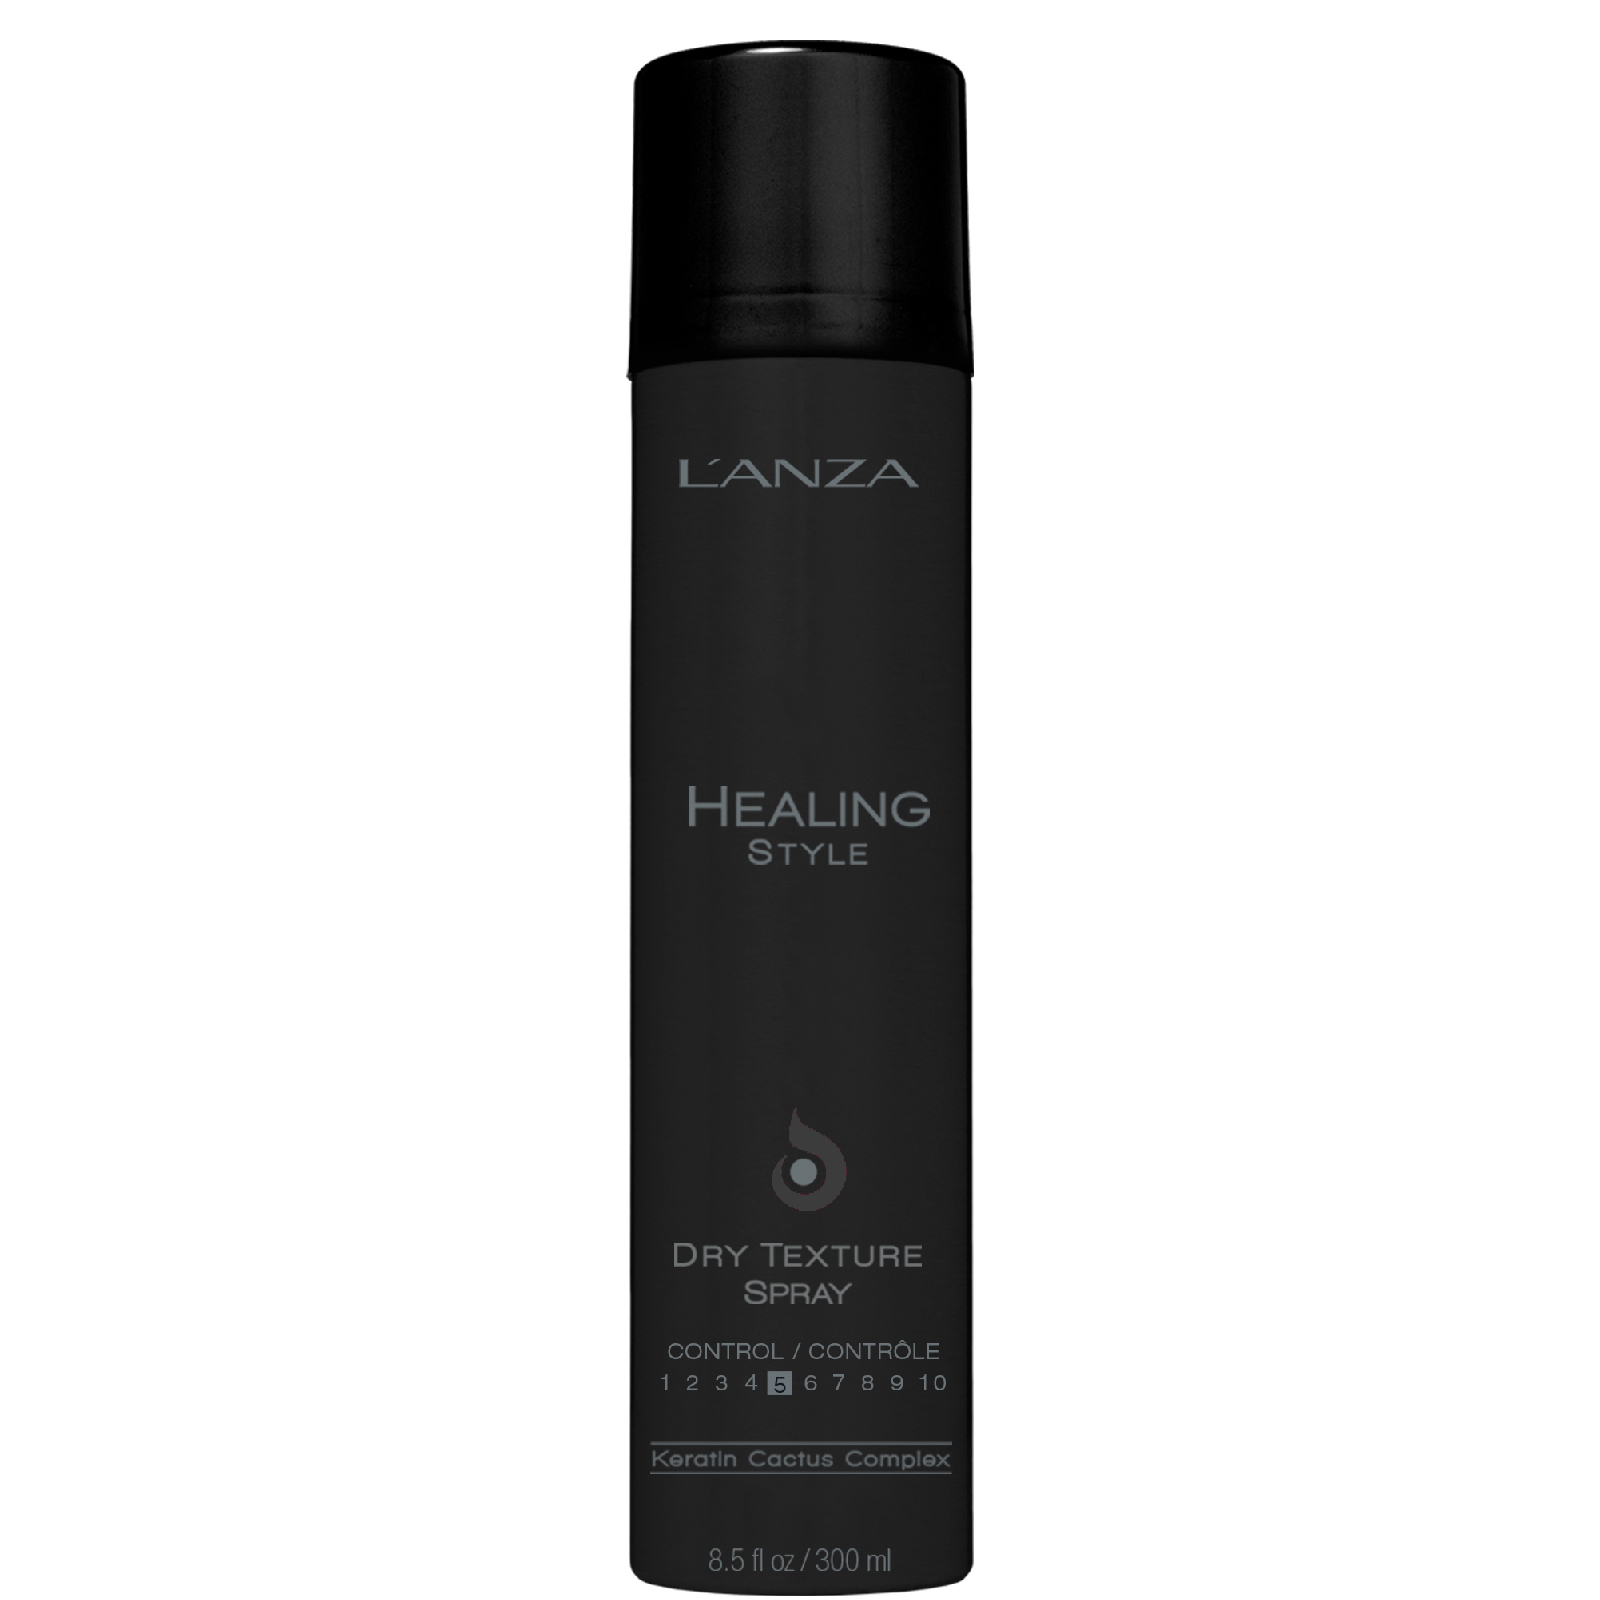 Spray Dry Texture Healing Style de L'Anza (300 ml)